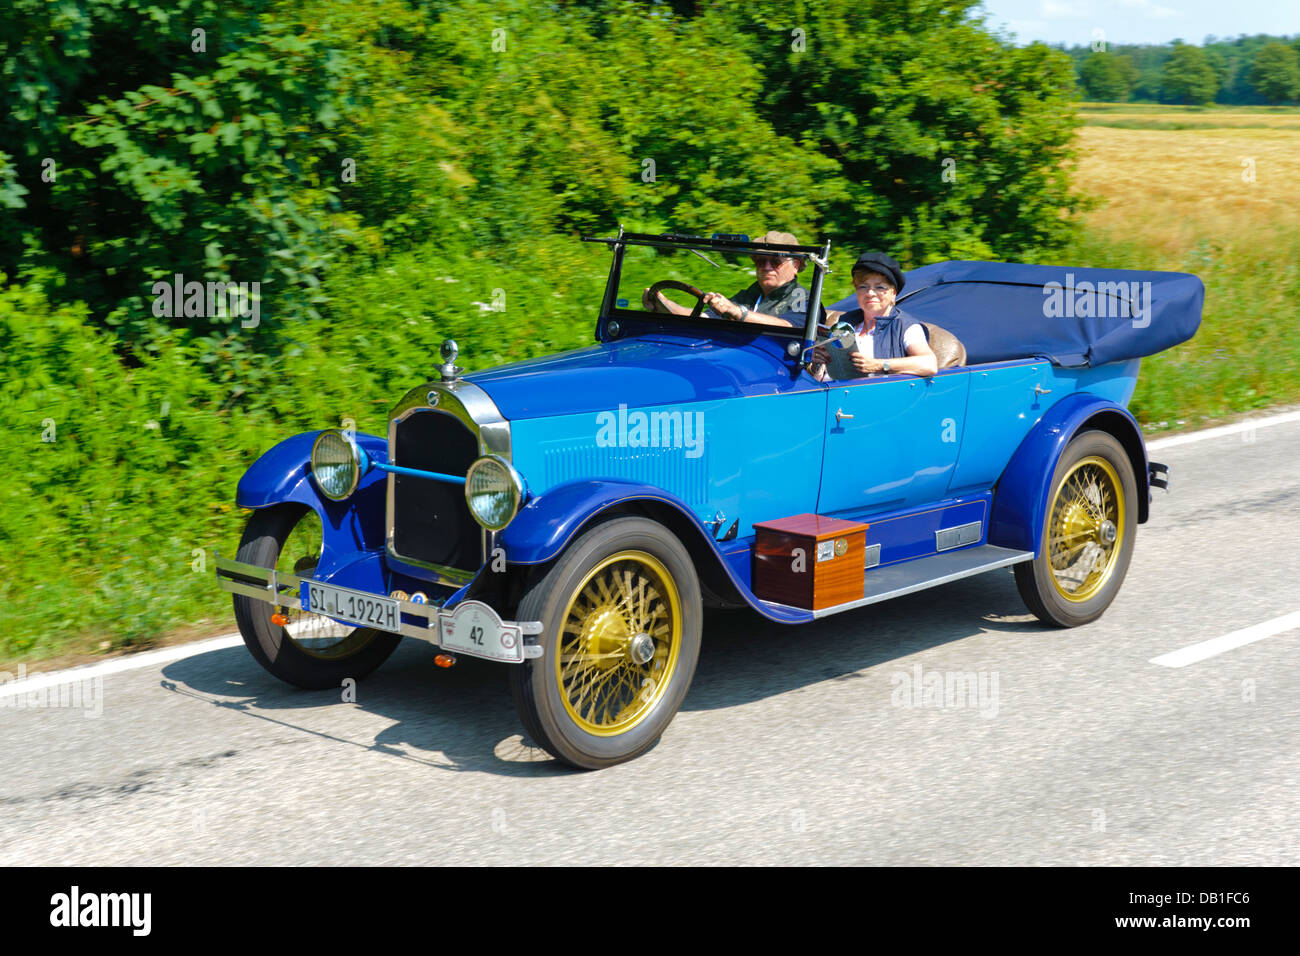 Studebaker Special Six Tourer, built at year 1922, photo taken on July 13, 2013 in Landsberg, Germany Stock Photo